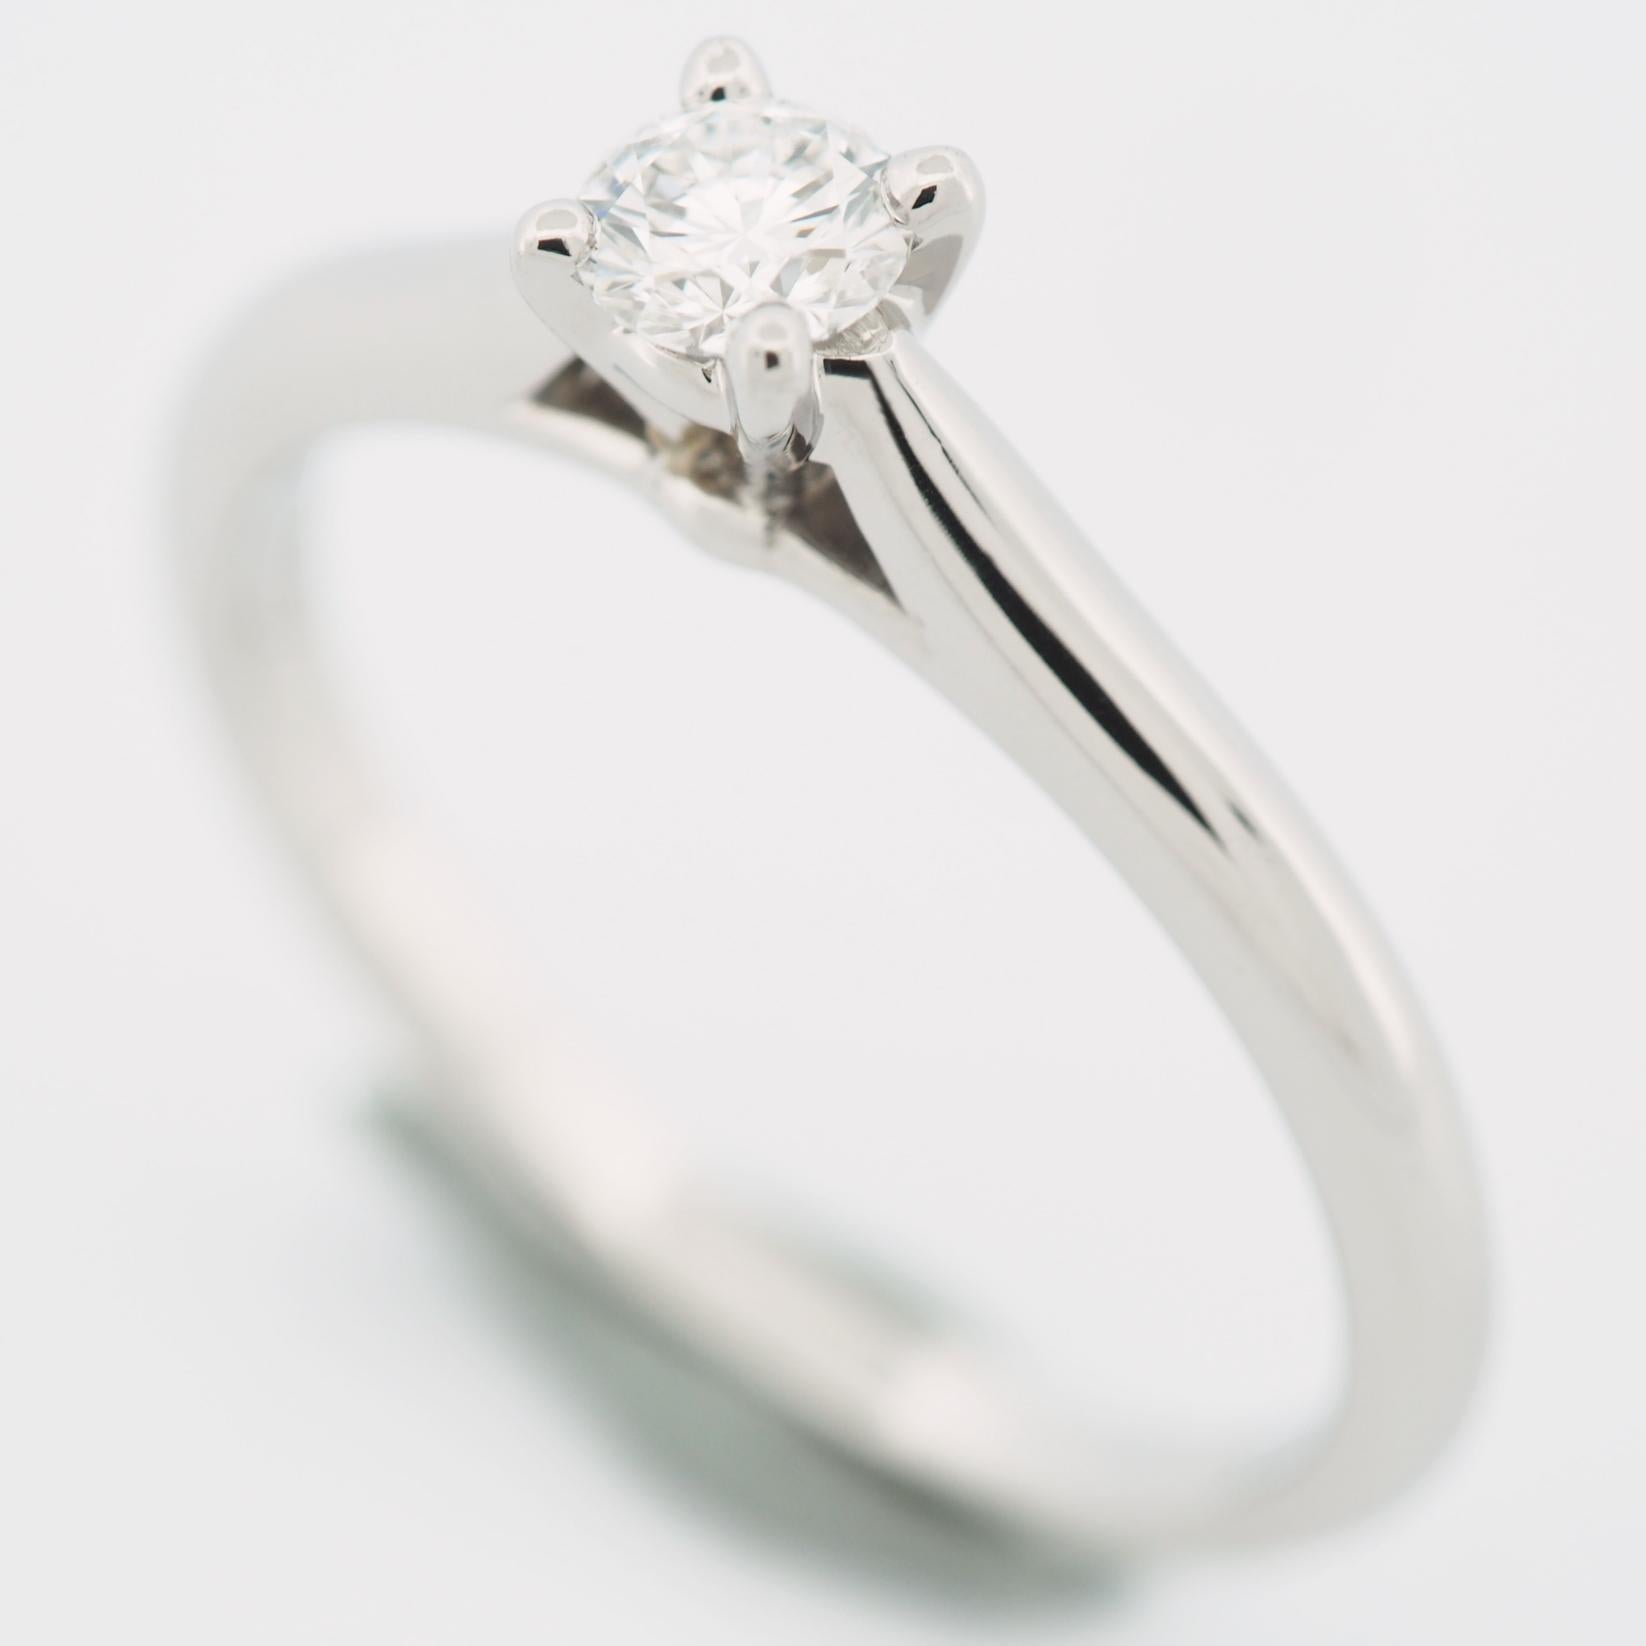 Item: Authentic Cartier 1895 Diamond Solitaire Ring
Stones: Diamond (0.18ct)
Color: F
Clarity:VVS2
Polish: Good
Symmetry: Excellent
Fluorescence: None
Metal: Platinum 950
Ring Size: 49 US SIZE 4.75 UK SIZE I 3/4
Internal Diameter: 15.50